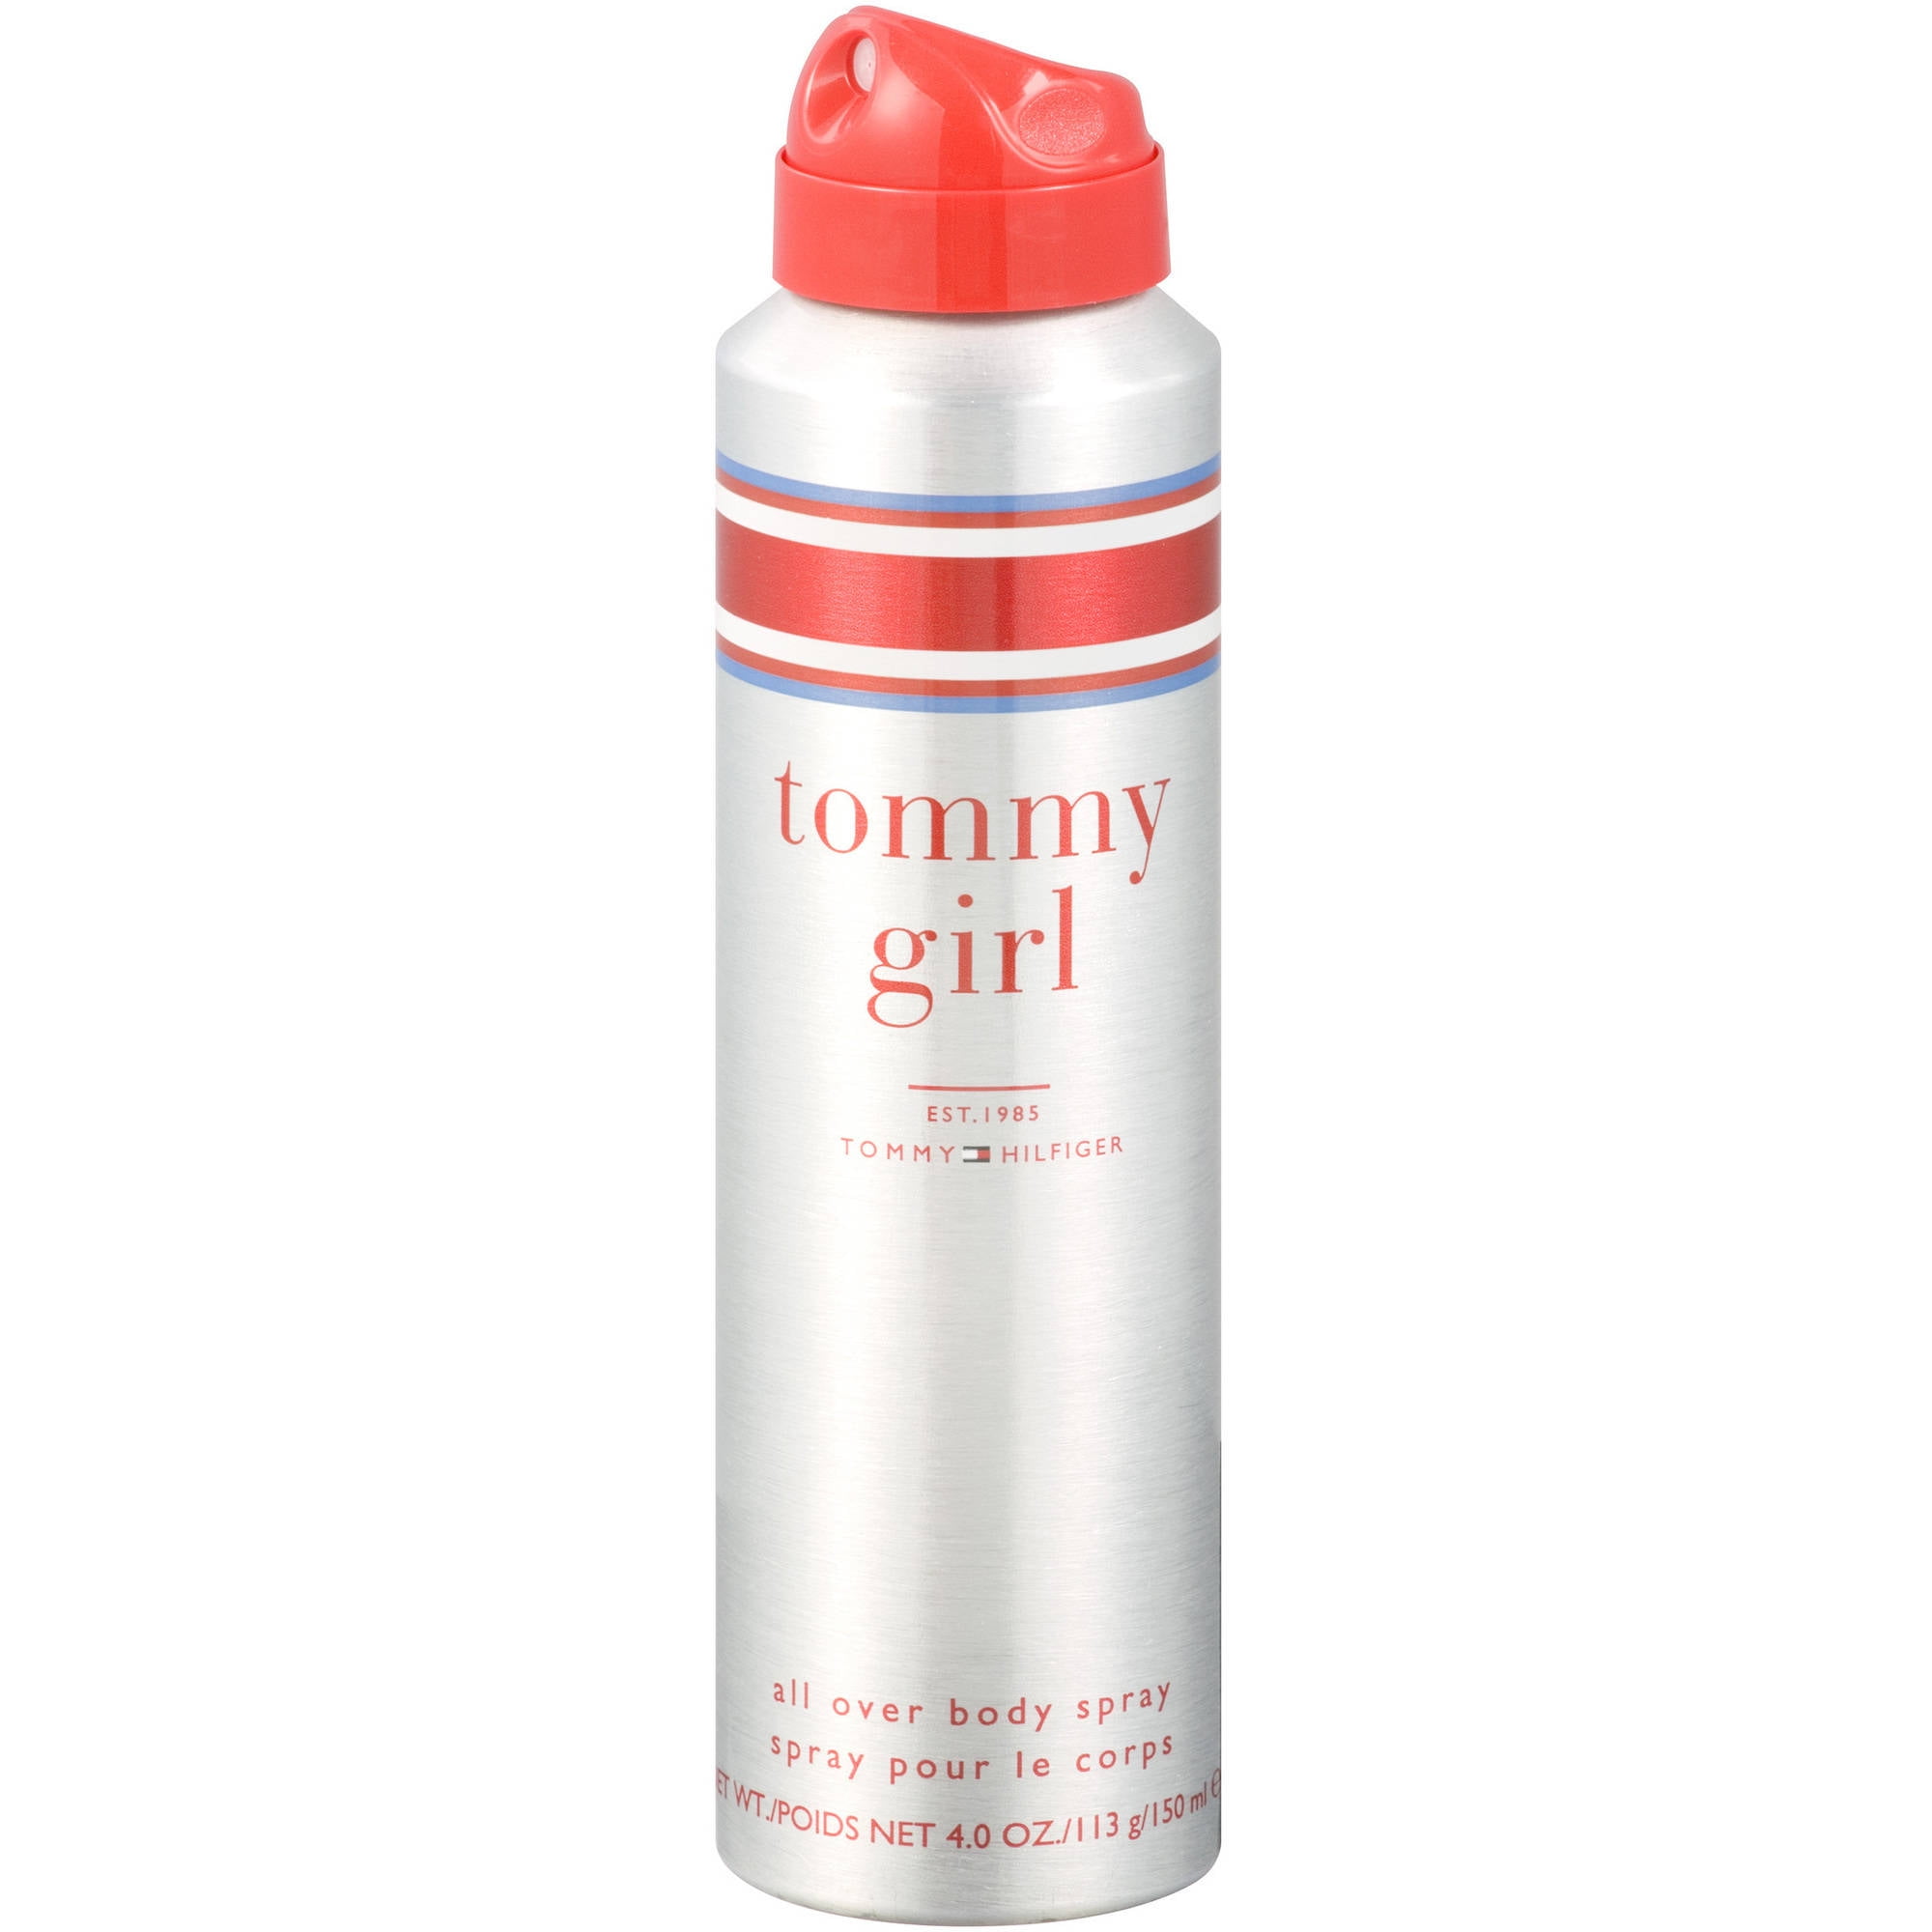 Tommy Hilfiger Beauty Tommy Girl Unisex Body Spray, 4 Oz - Walmart.com